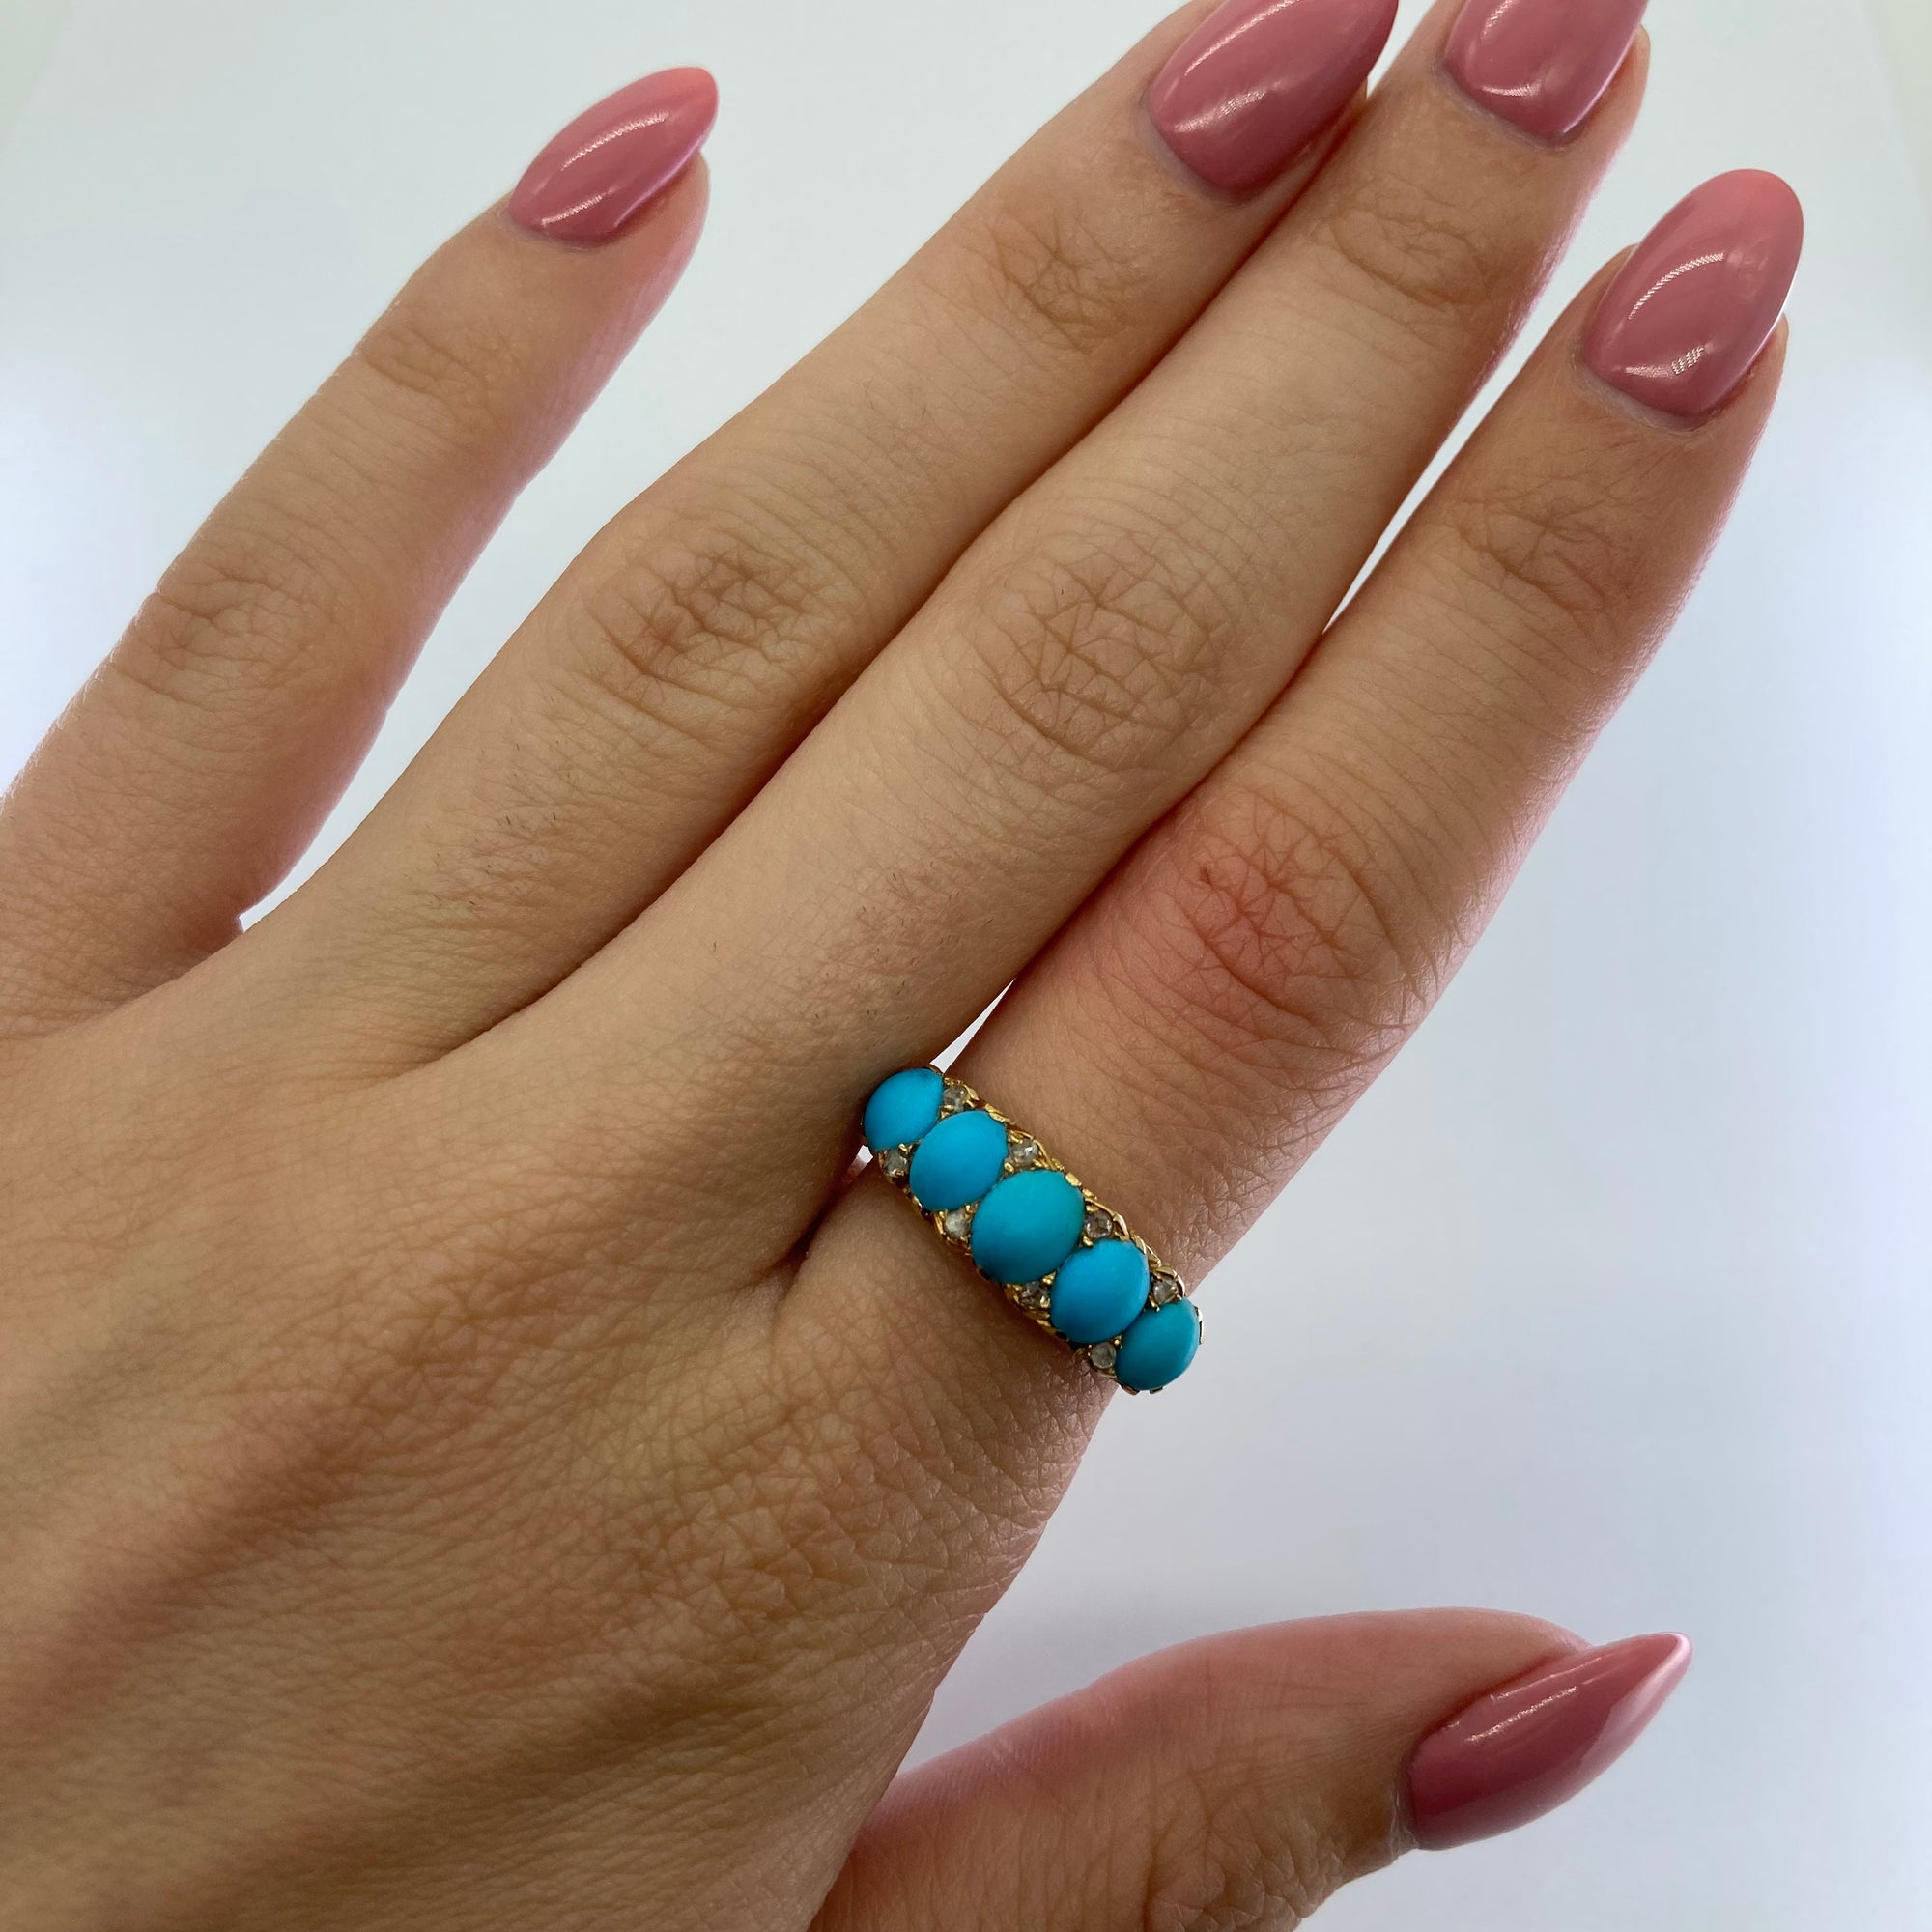 Georgian Era Turquoise & Diamond Ring | 0.08 ctw, SZ 6.5 |